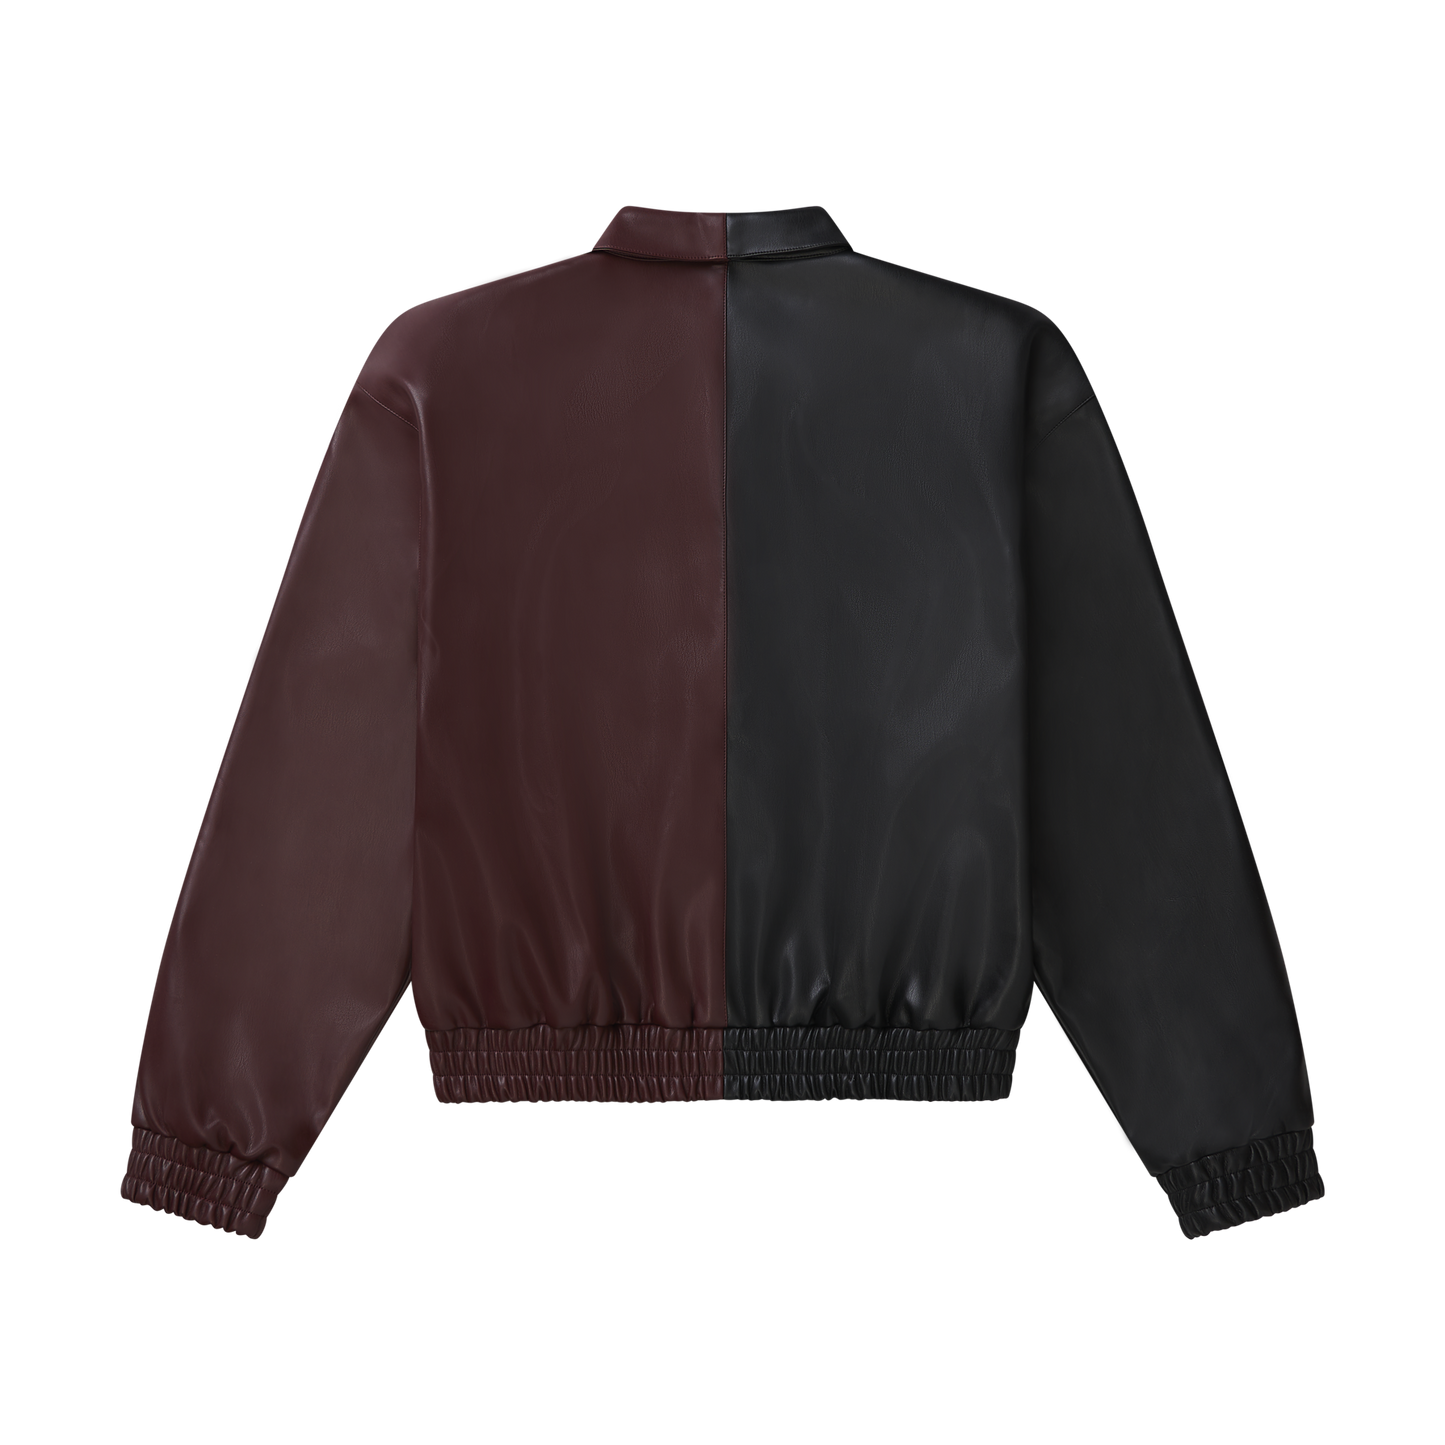 4X4 Jacket (Black and Brown)